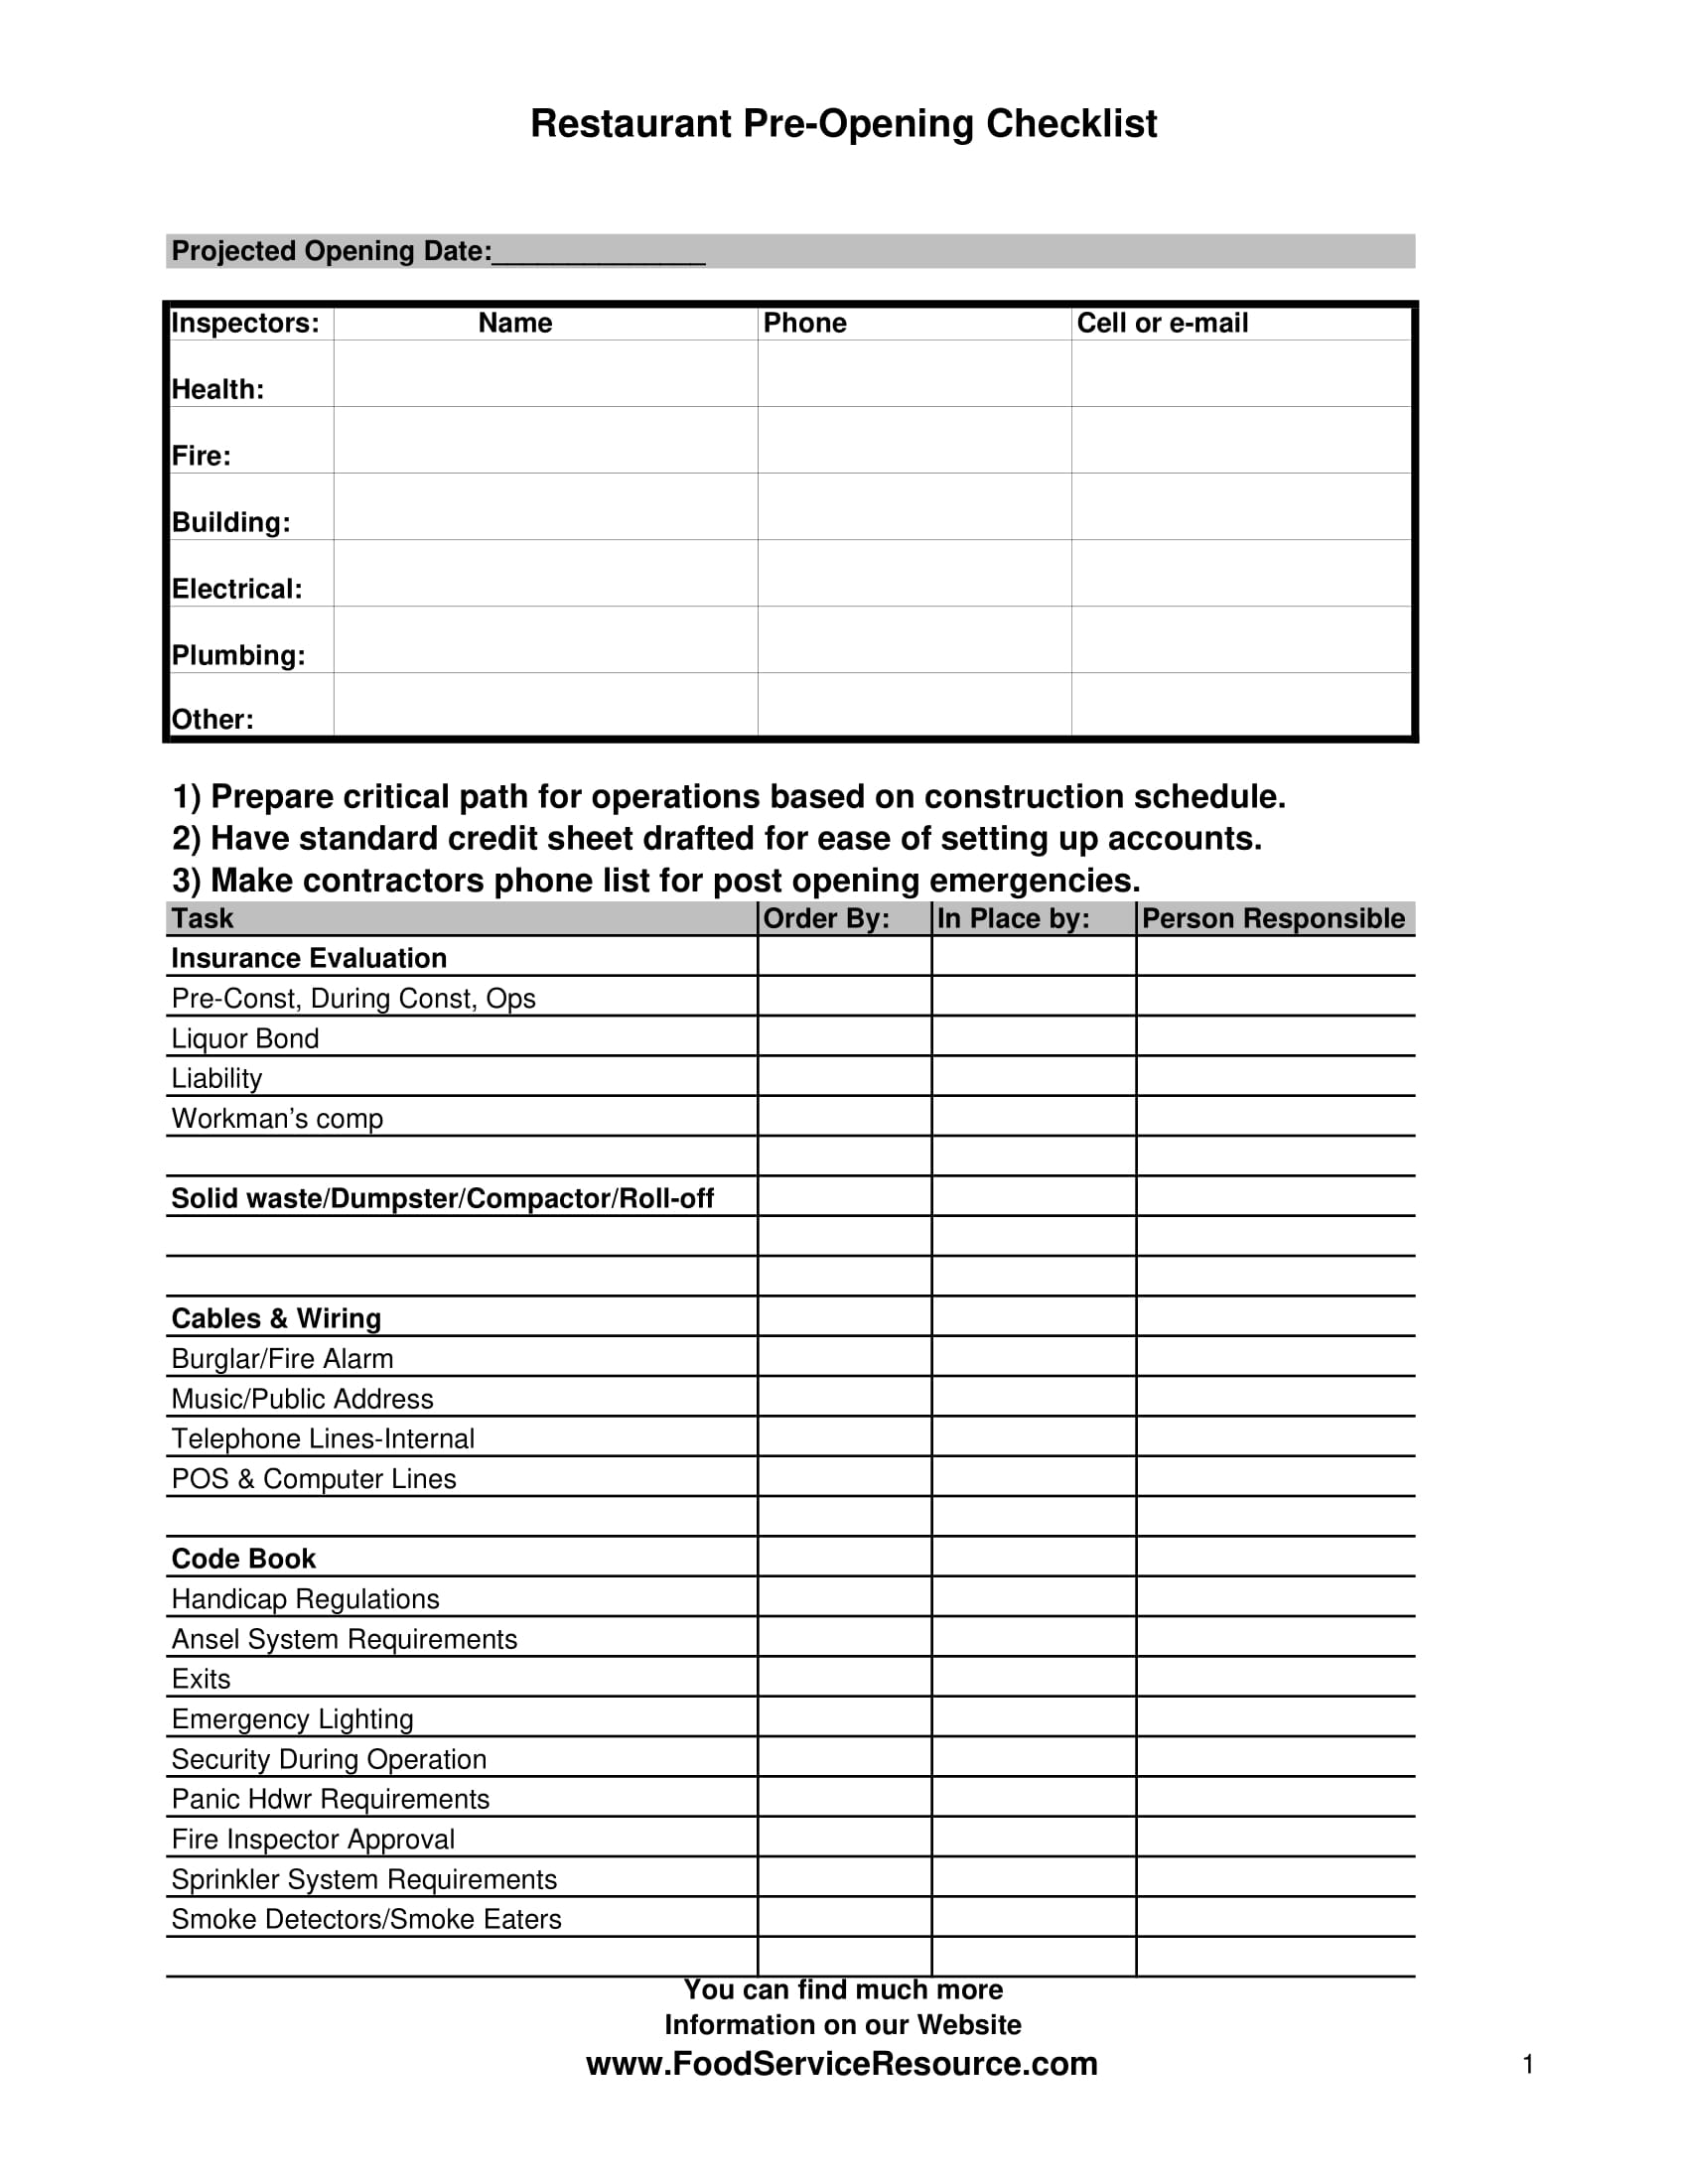 restaurant pre opening checklist form 01